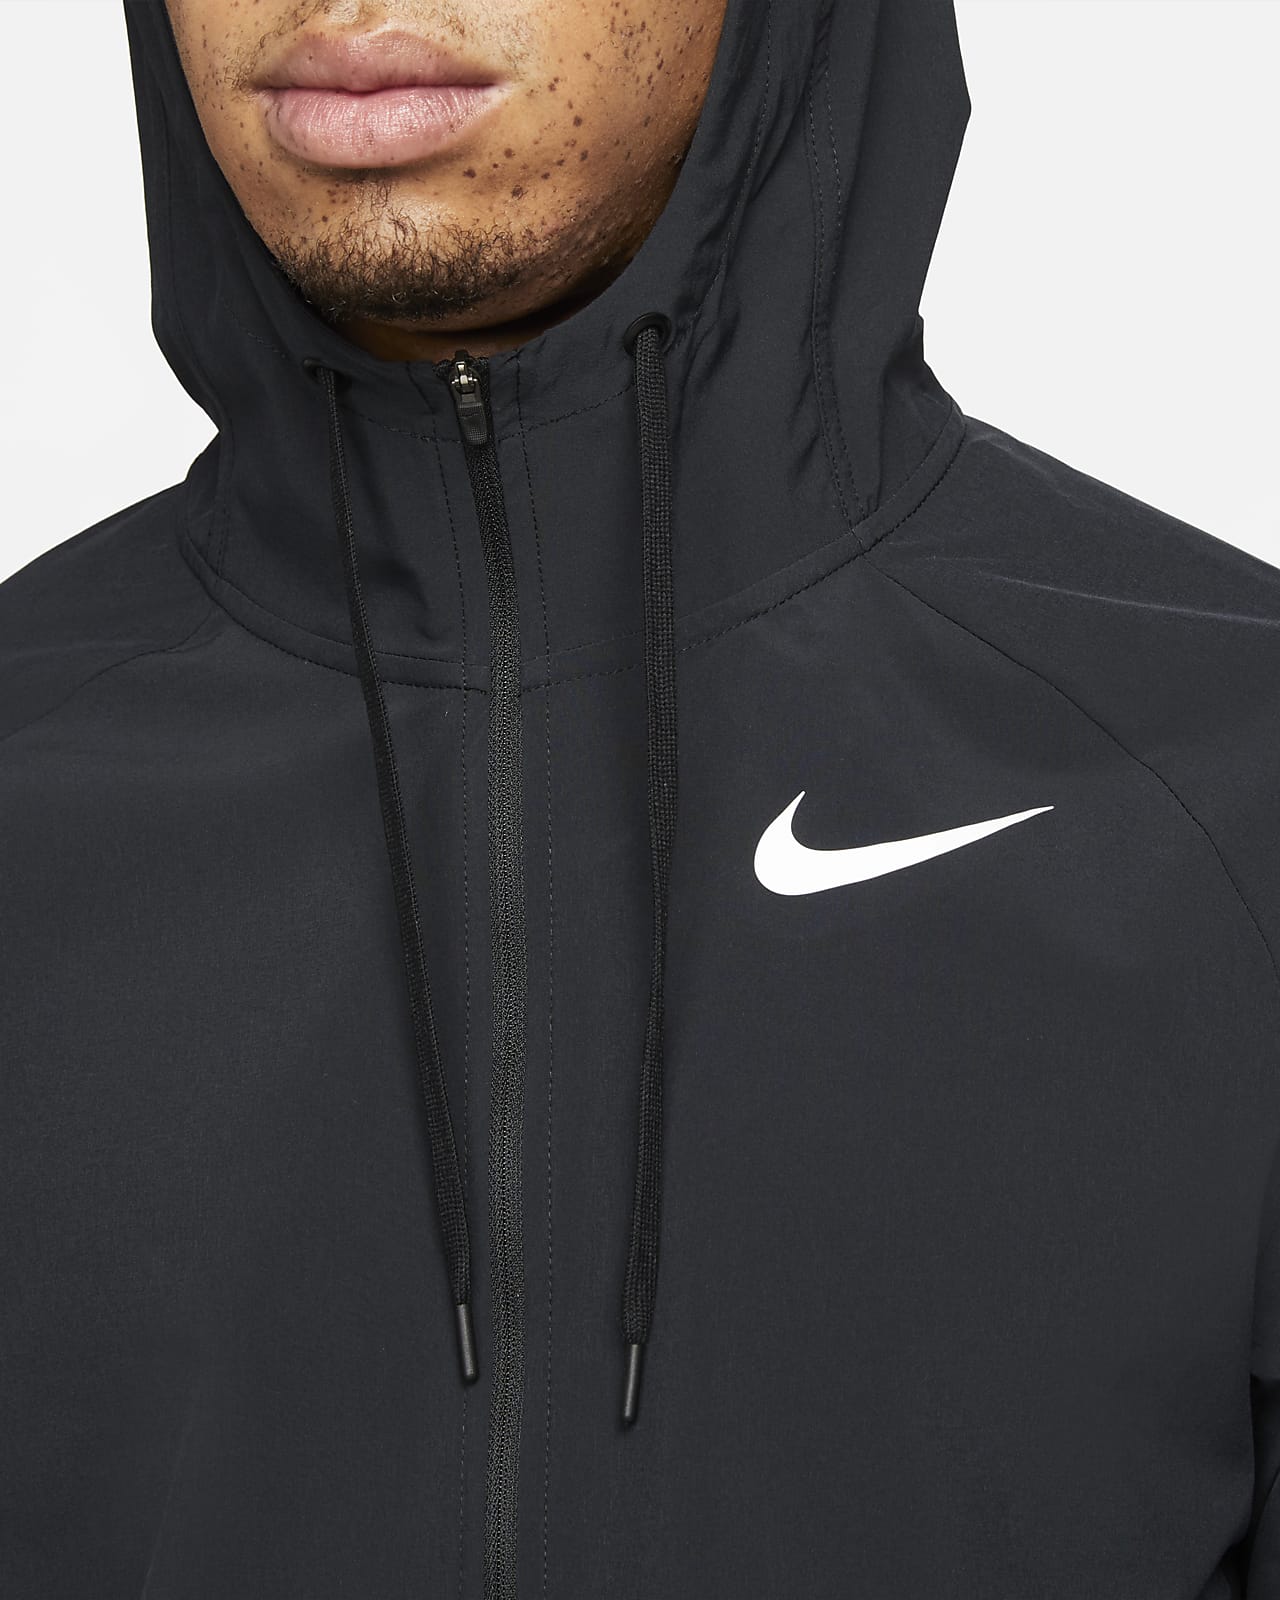 Nike, Pro Dri-FIT Flex Vent Max Men's Full-Zip Hooded Training Jacket, Black